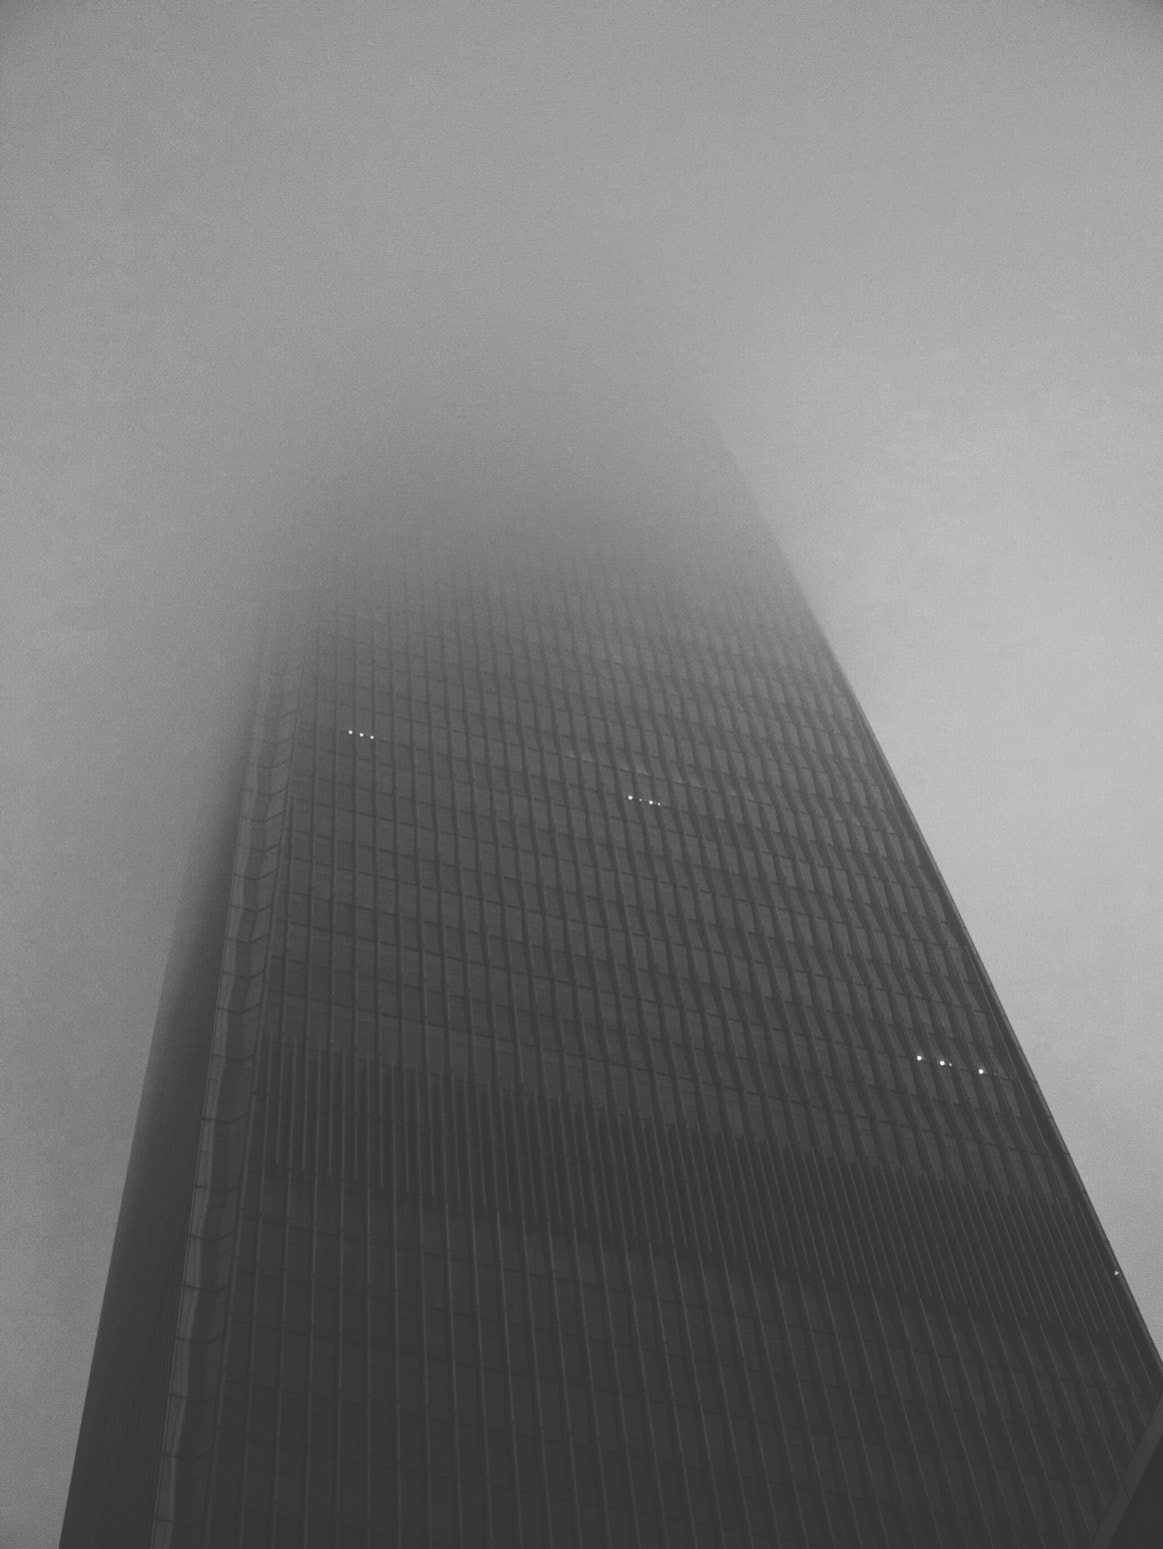 Panasonic Lumix DMC-GF6 sample photo. The fog of the building photography